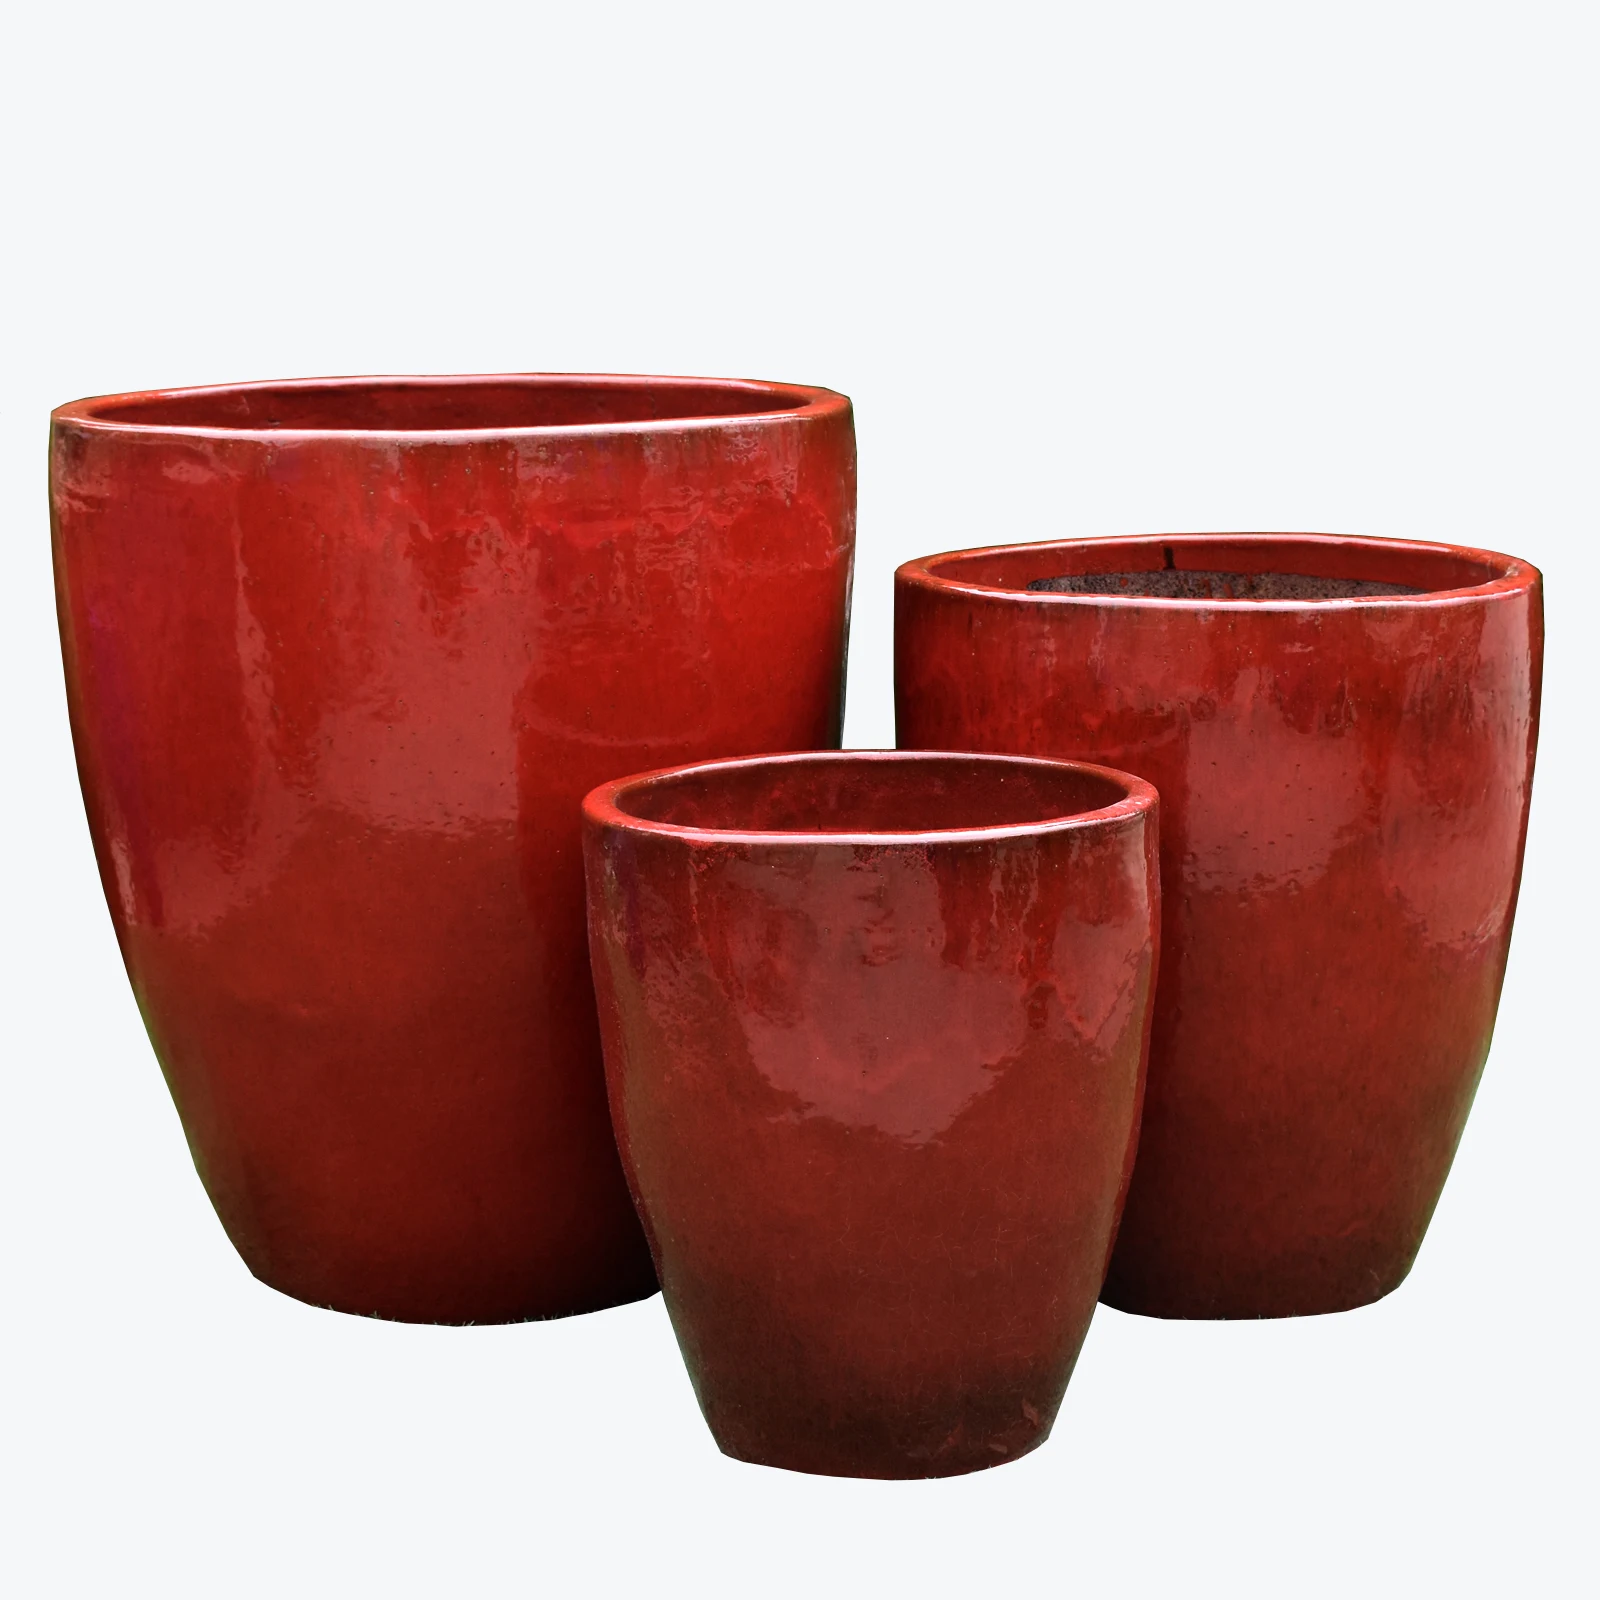 Handmade Glazed Ceramic Flower Pot Simple Style Decorative Garden Planter Medium Size for Indoor and Outdoor for Restaurants